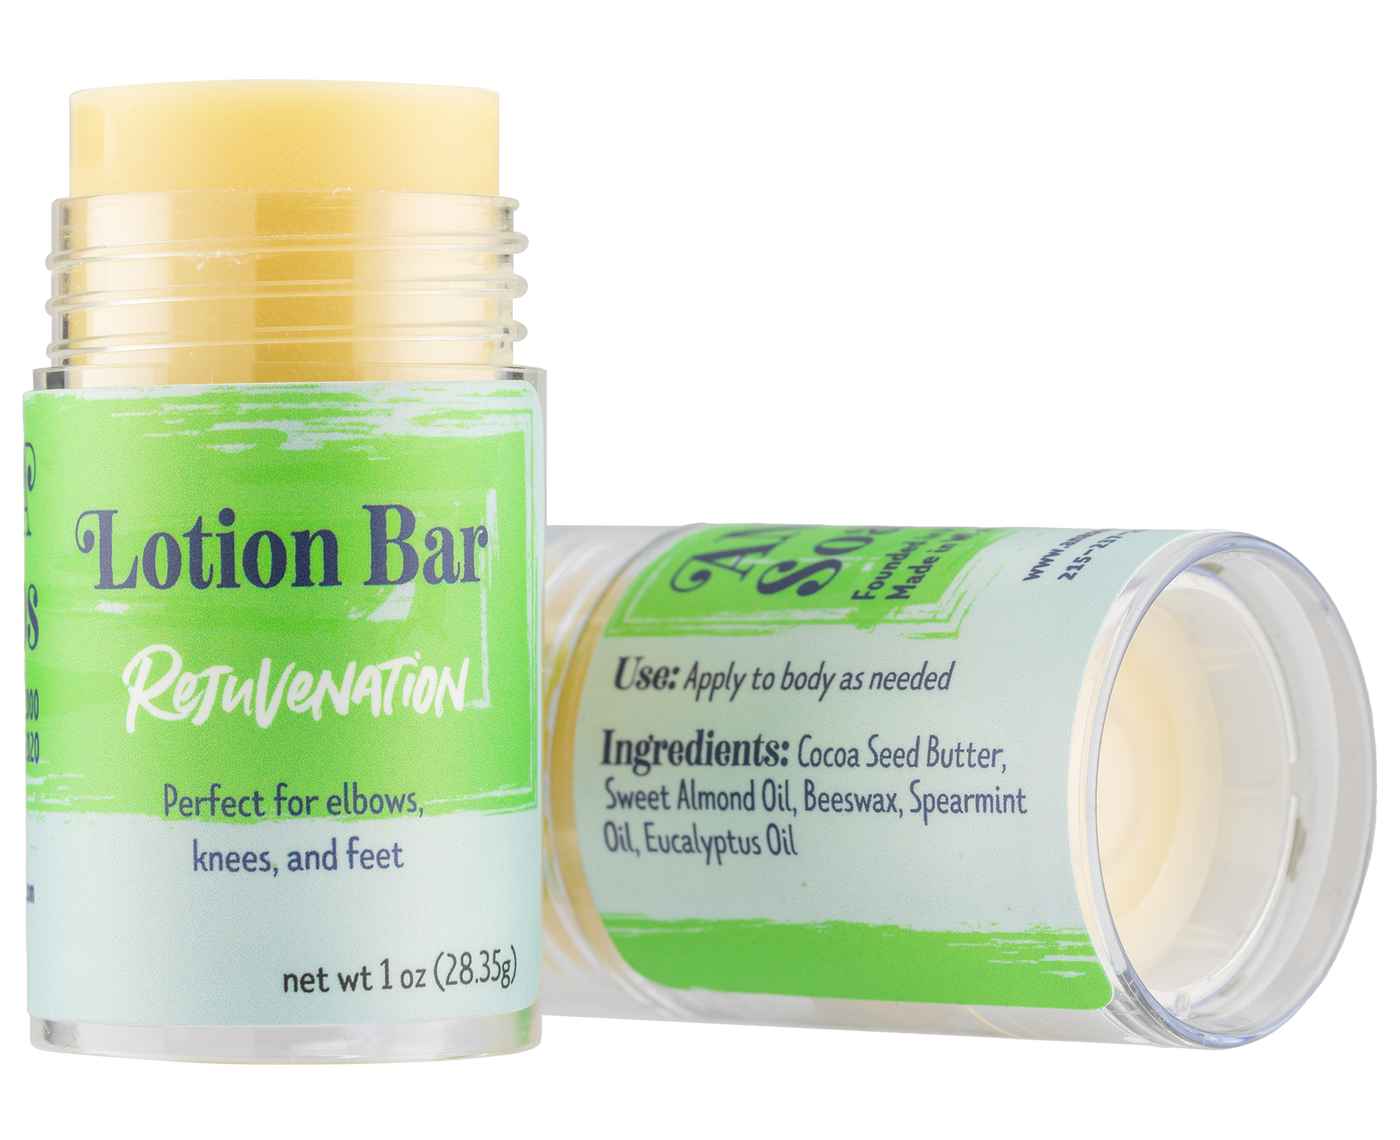 Rejuvenation Lotion Bar